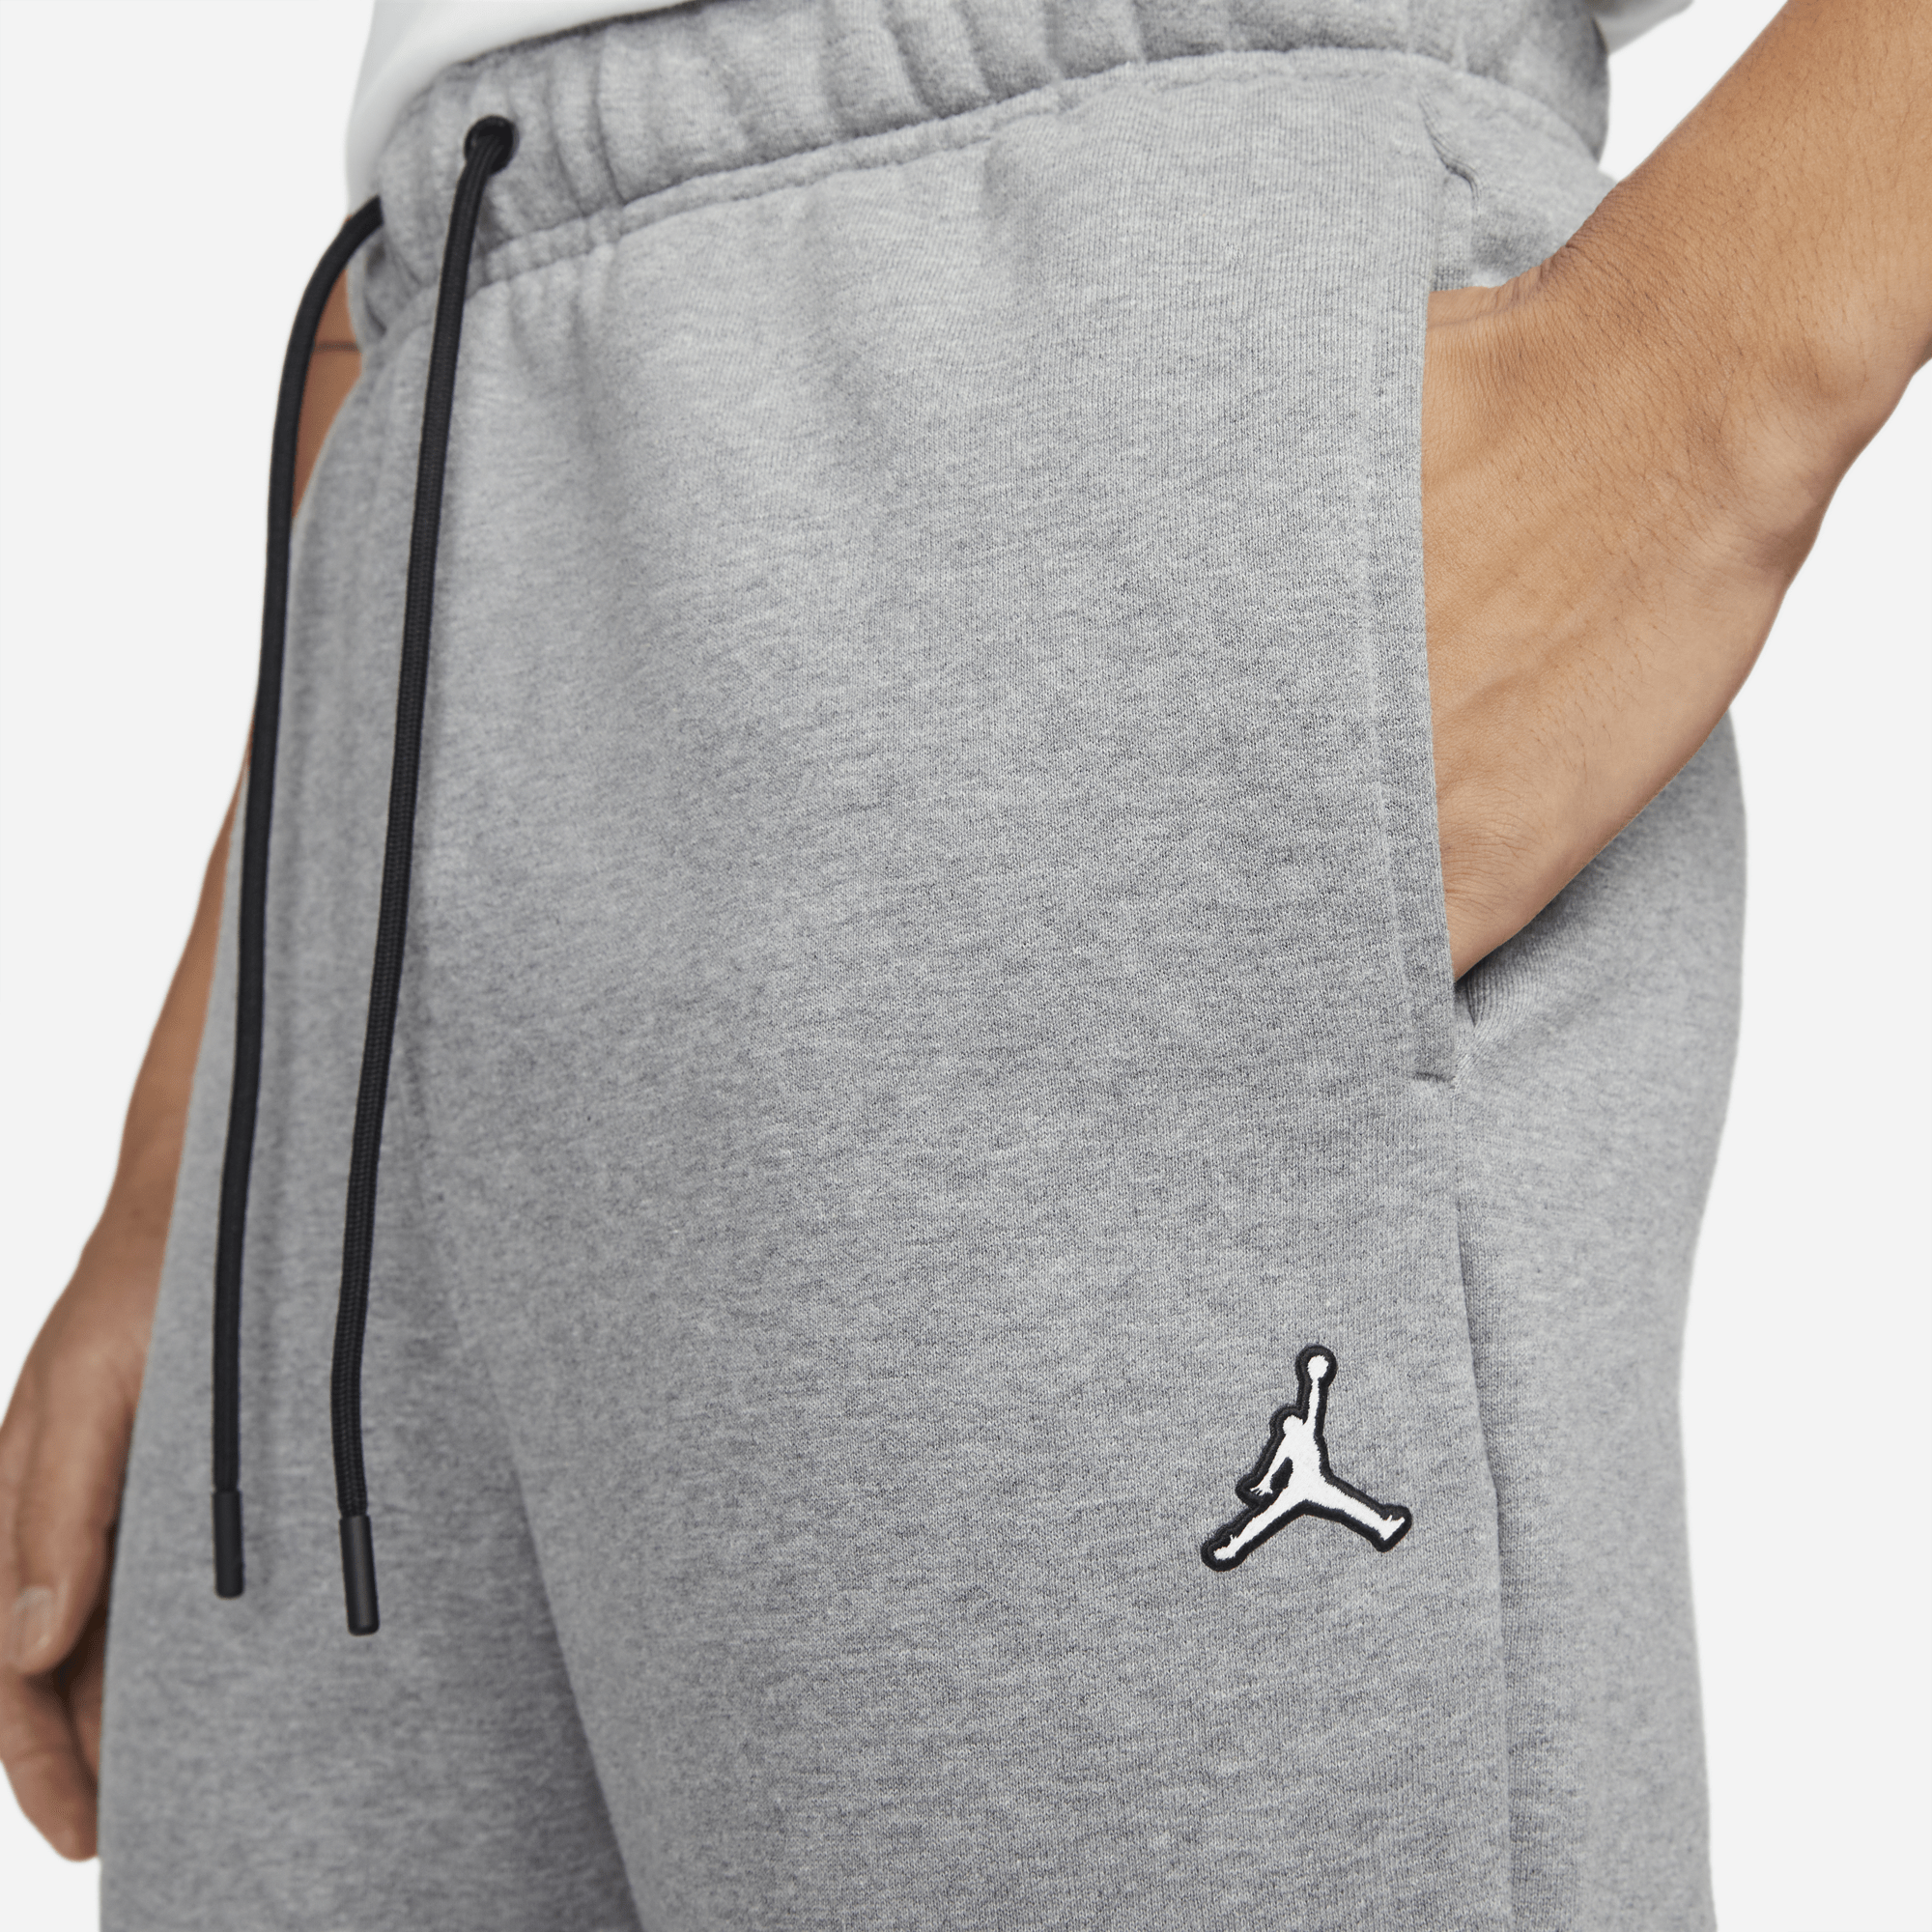 Air Jordan Air Jordan Essentials Fleece Pants - Men's